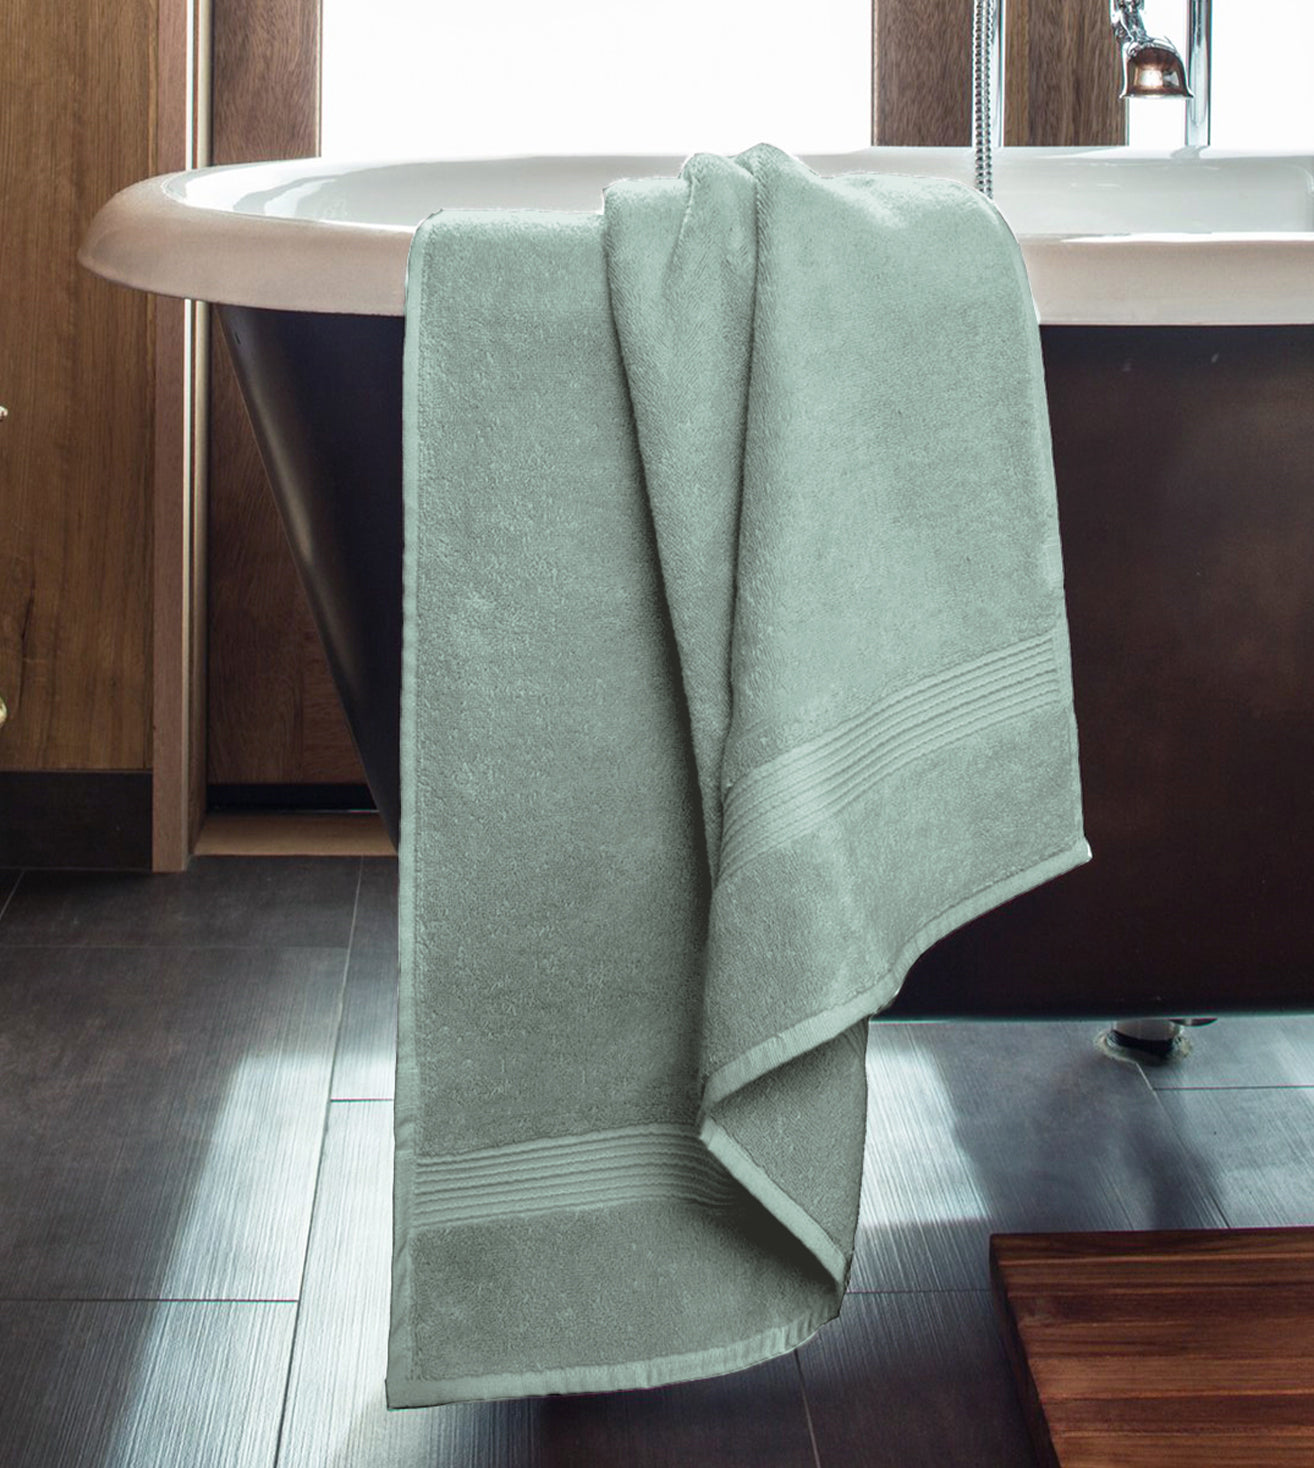 100% Organic Cotton Bath Towel, Super-soft, Luxurious, 600 GSM - Khaki Green